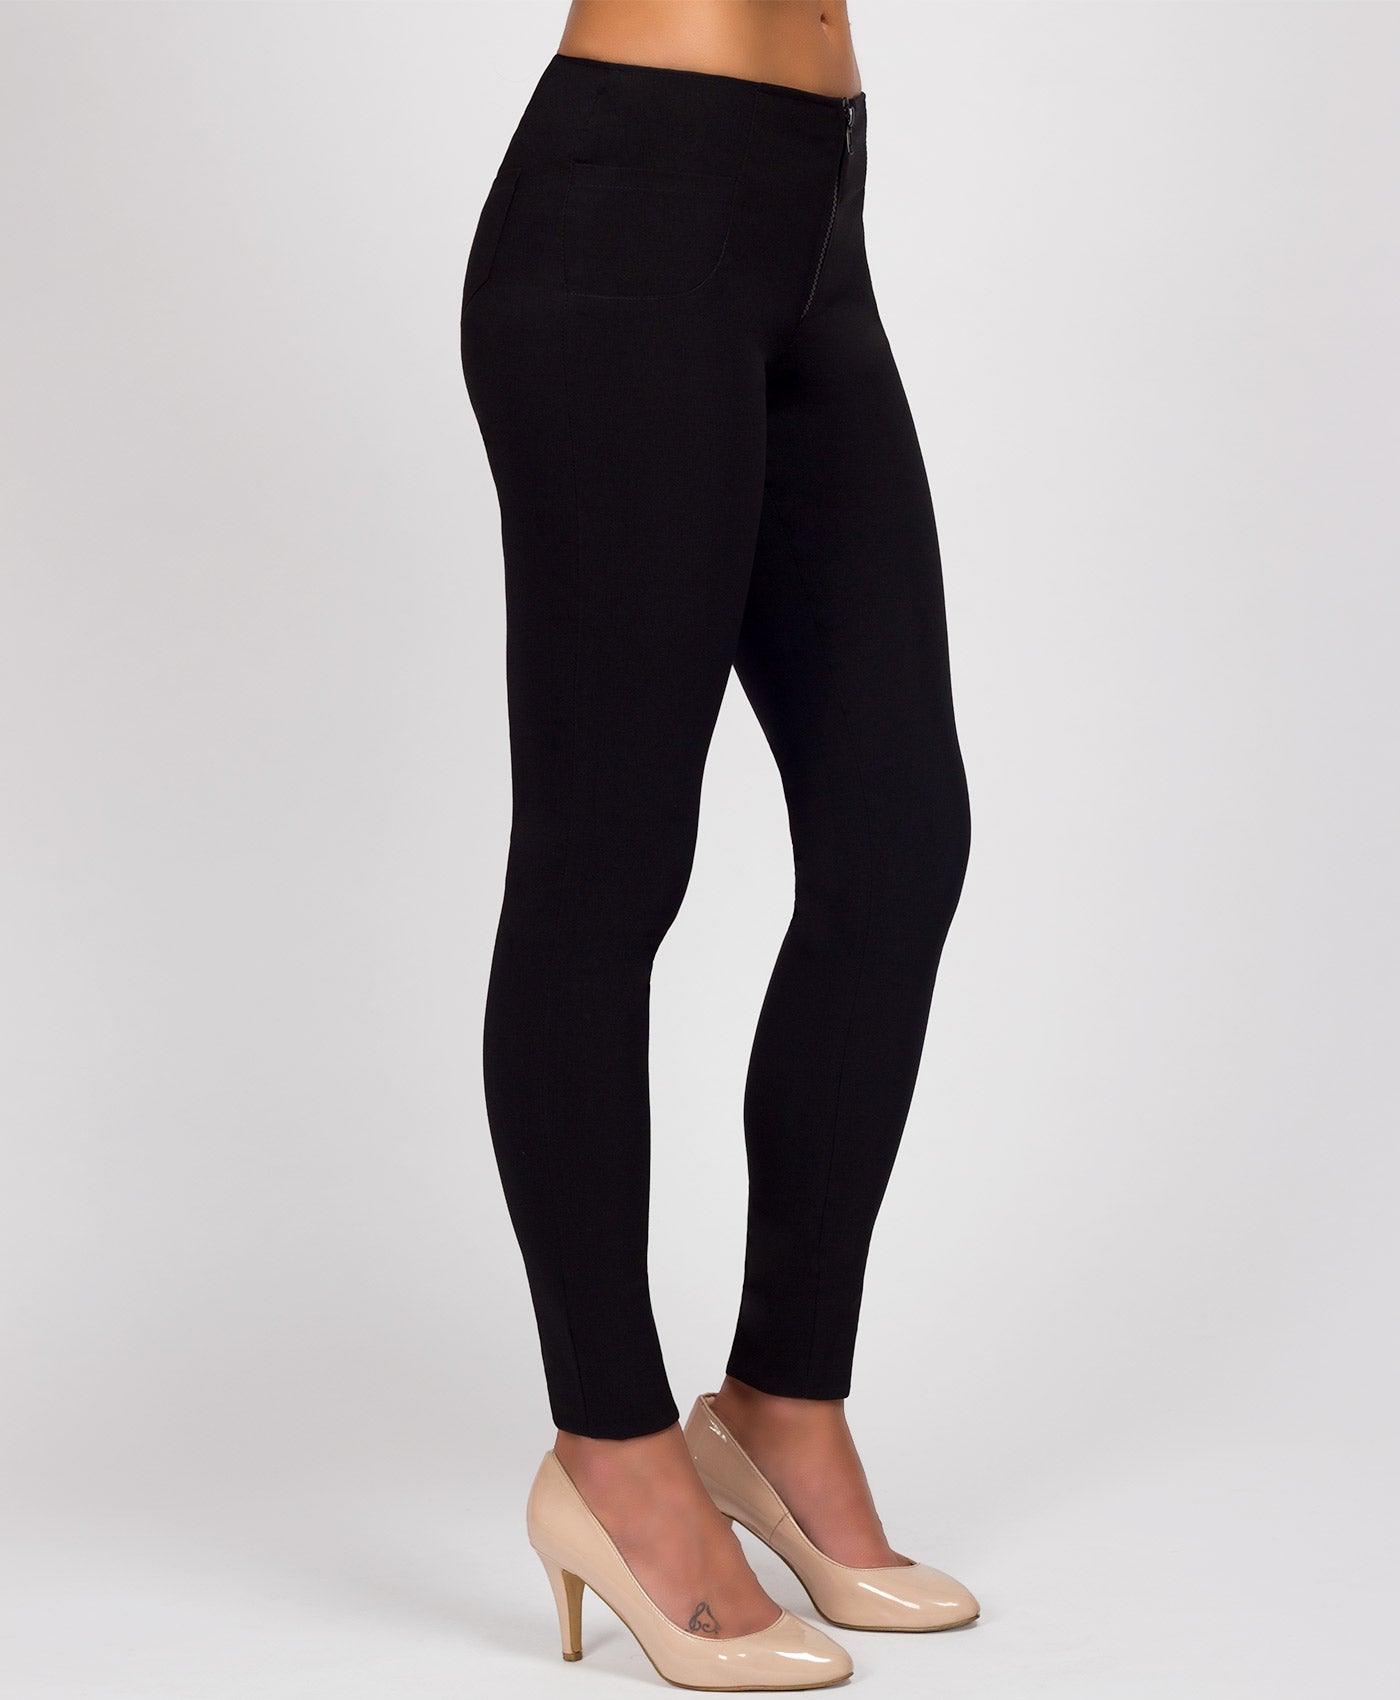 Lexi Fashion Womens PU PVC Faux Leather Matte Look High Waist Fleece Lining  Stretch Skinny Leggings